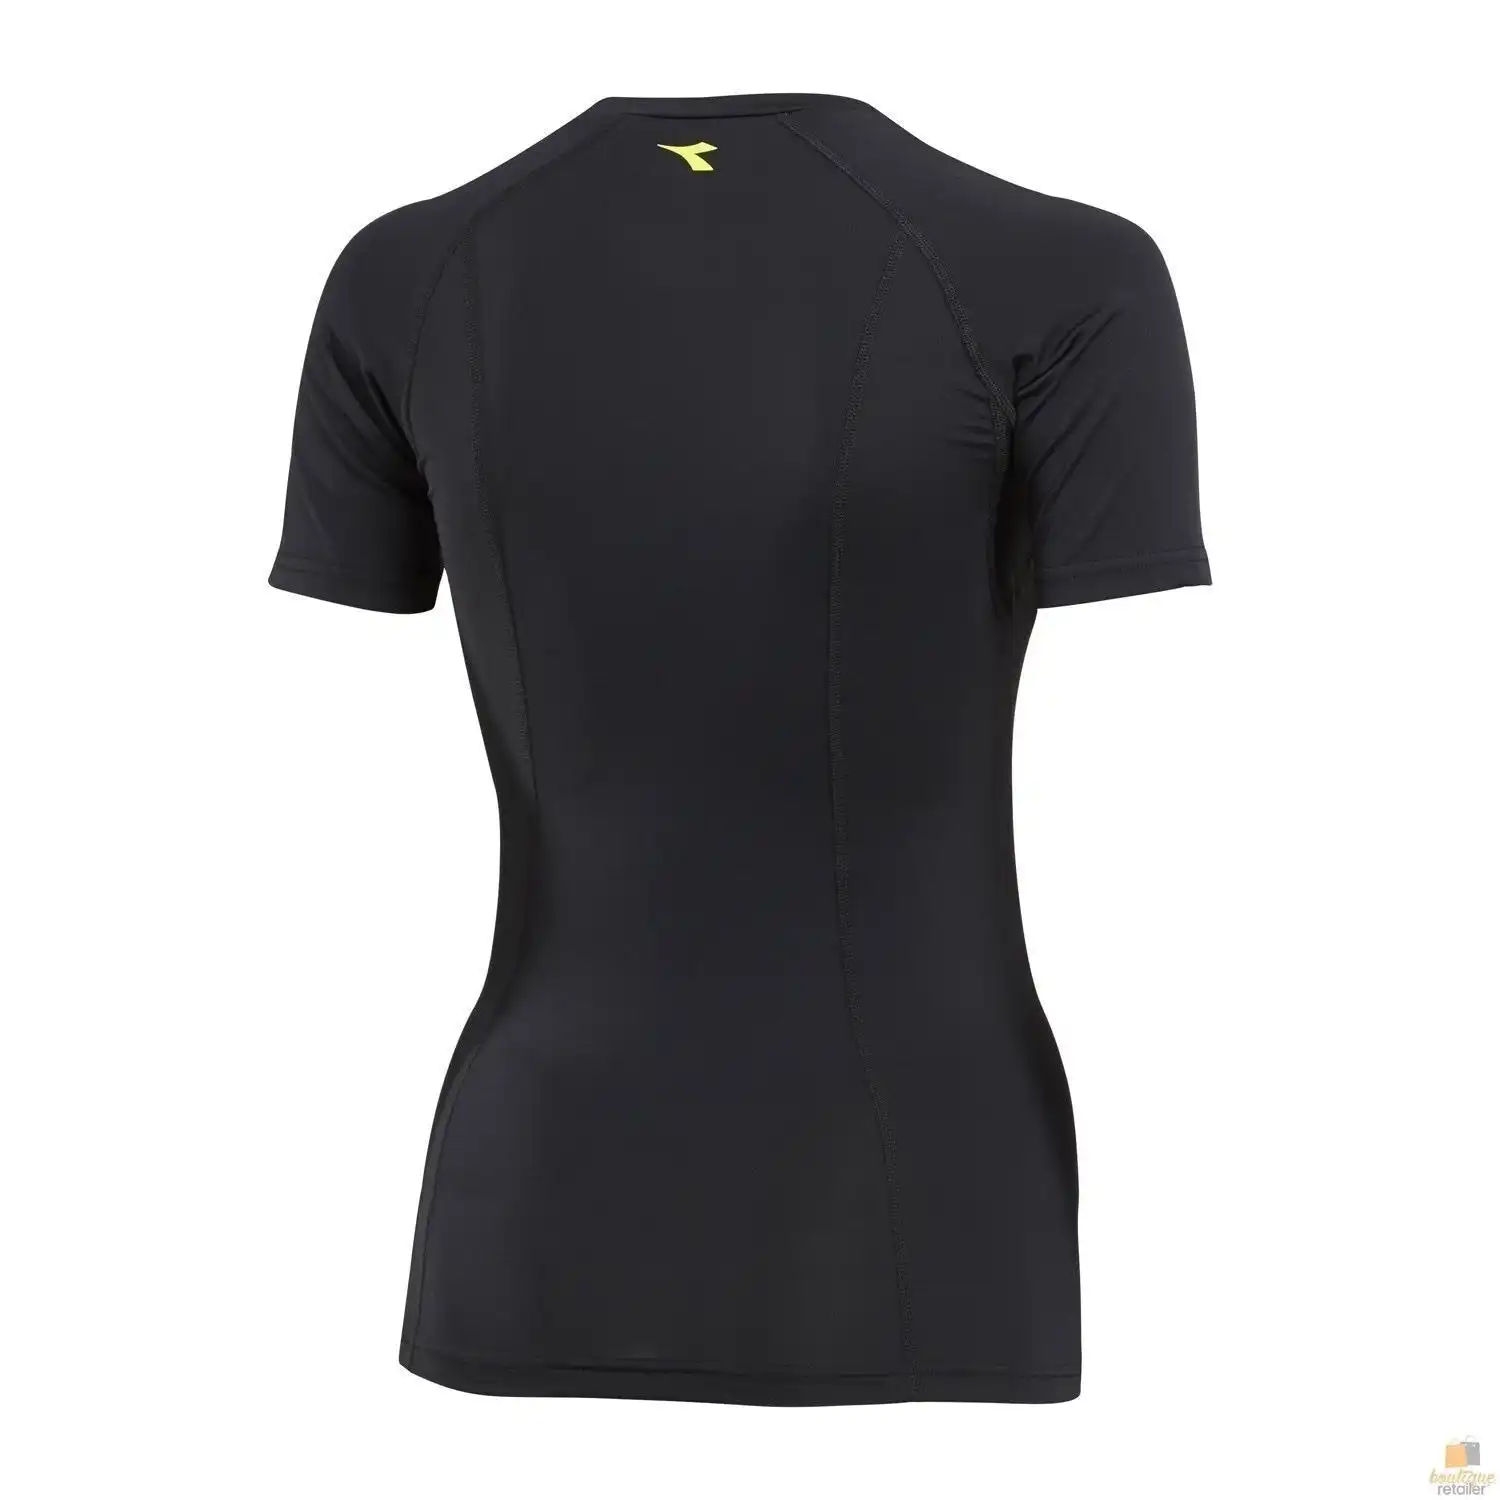 Diadora Ladies Women's Compression Short Sleeve Top Fitness Gym Yoga - Black